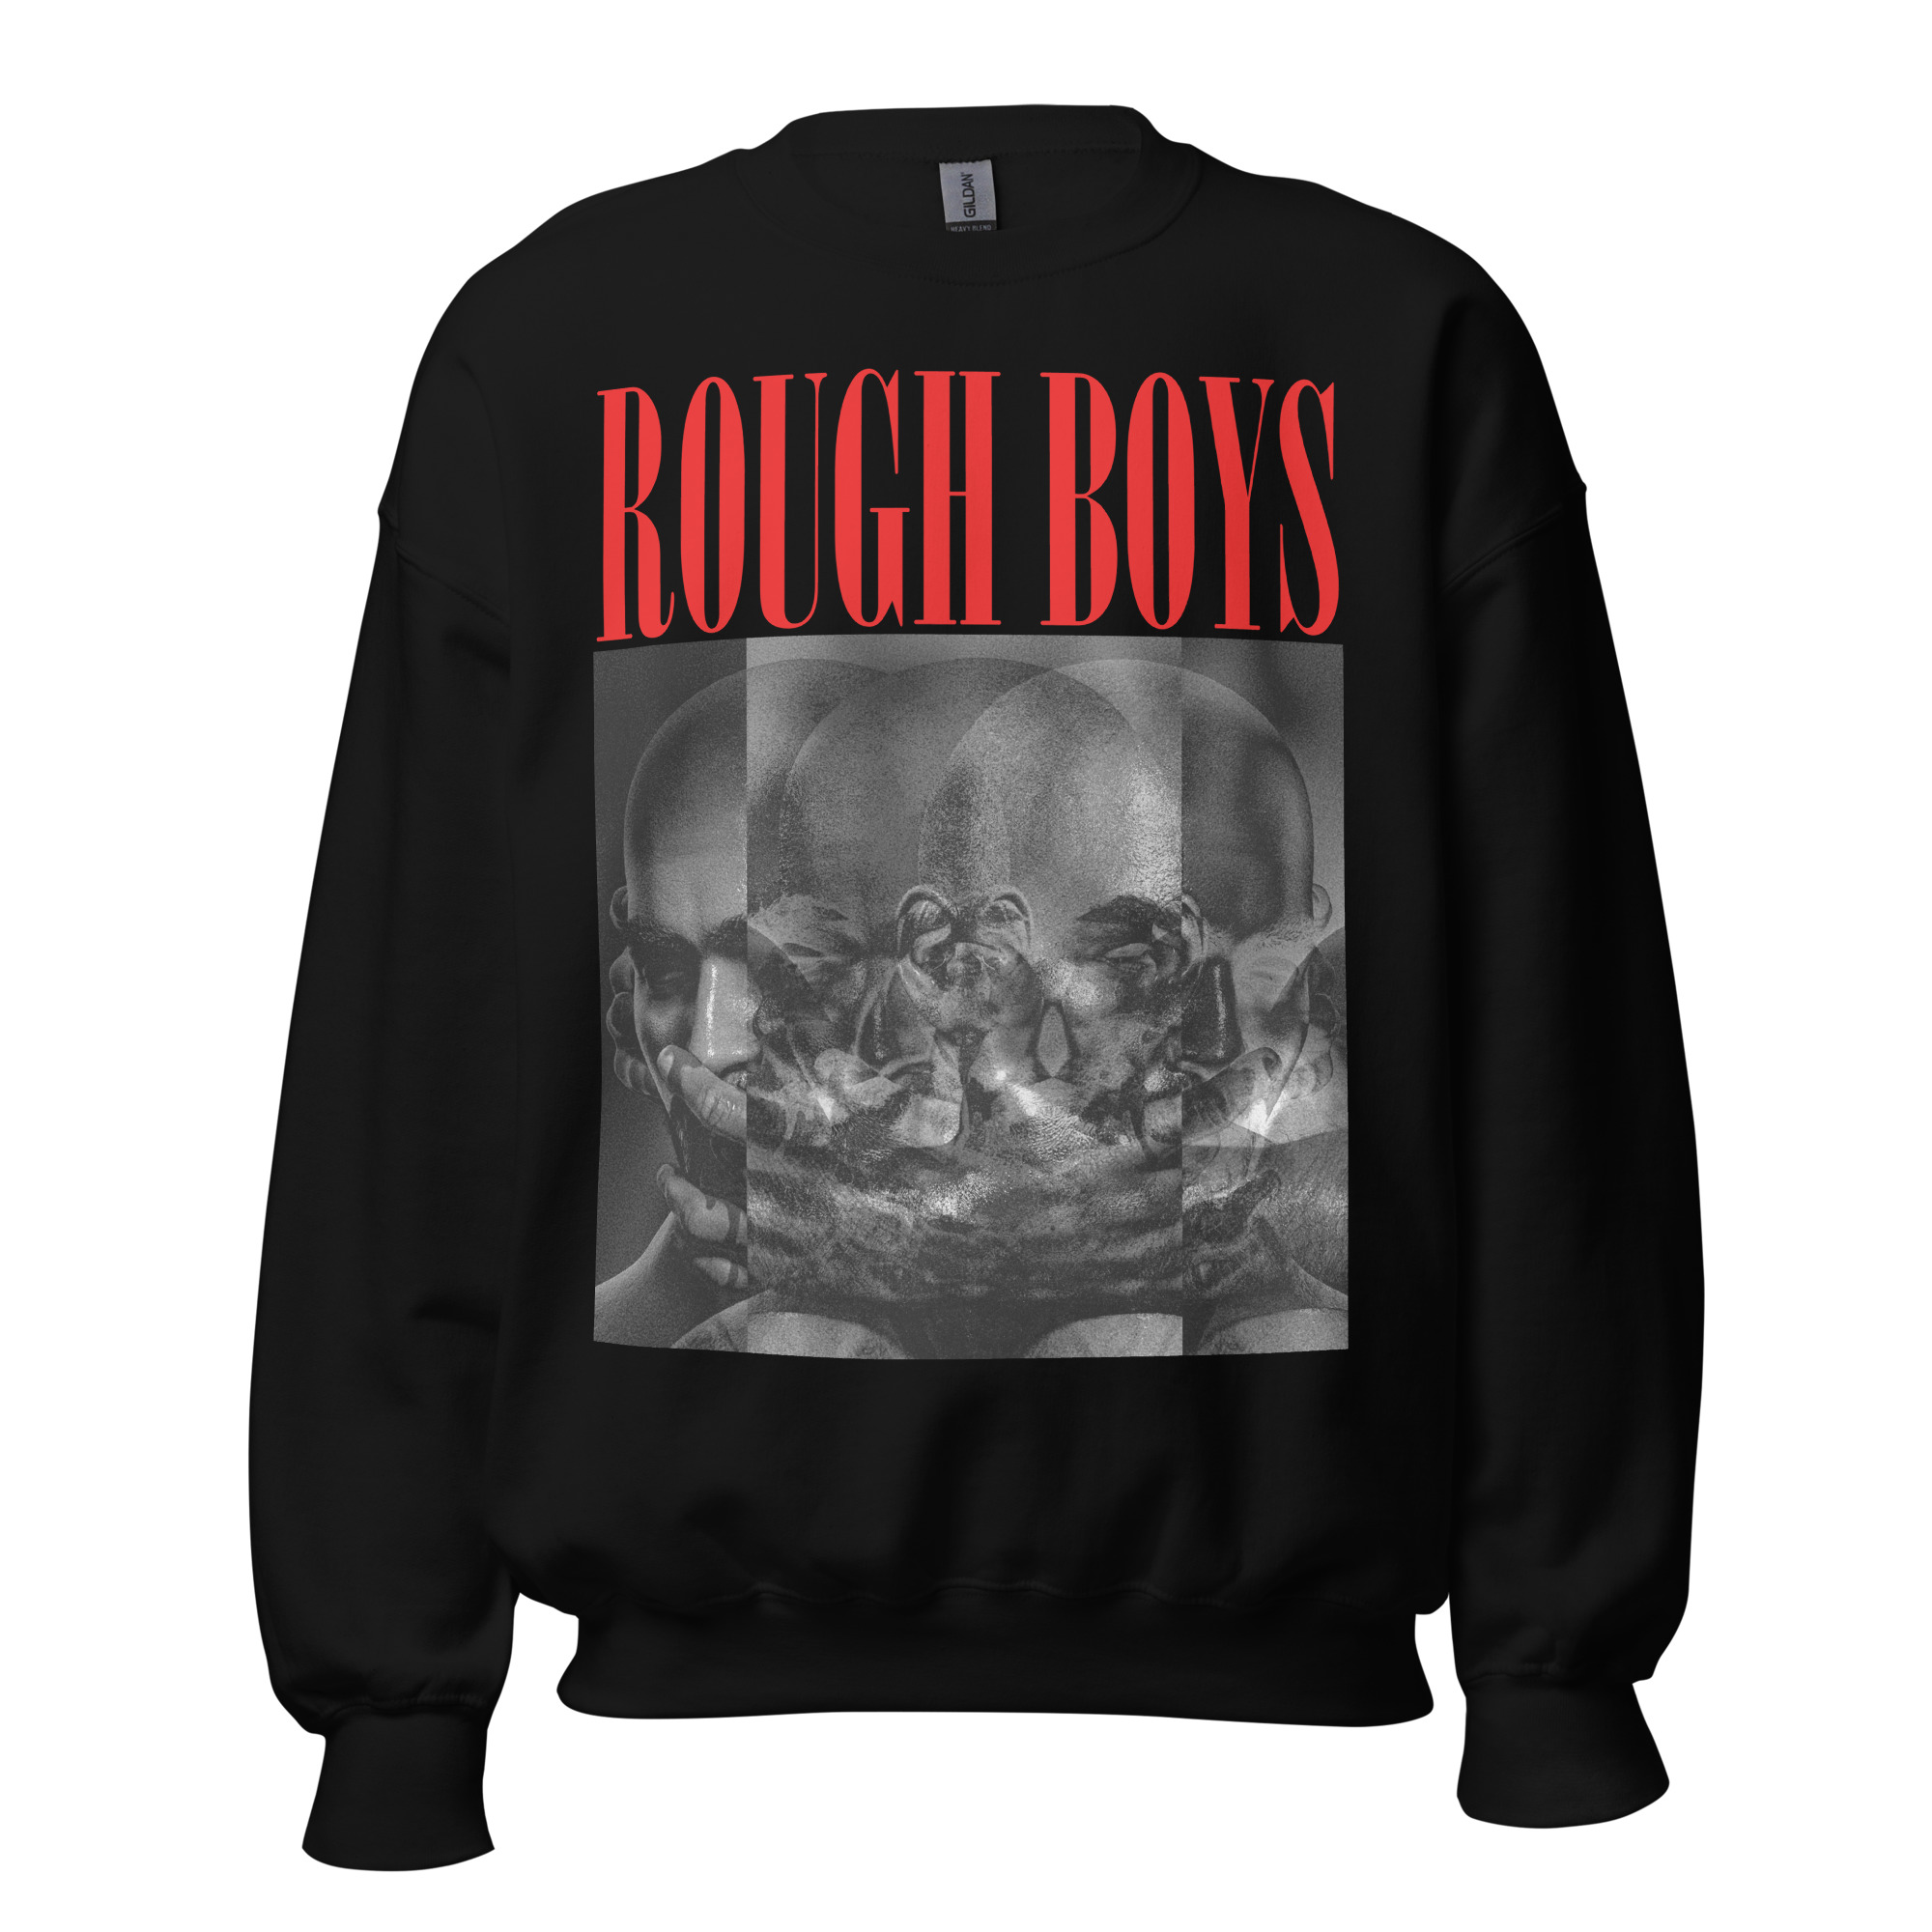 Featured image for “Rough Boys - Unisex Gildan Sweatshirt”